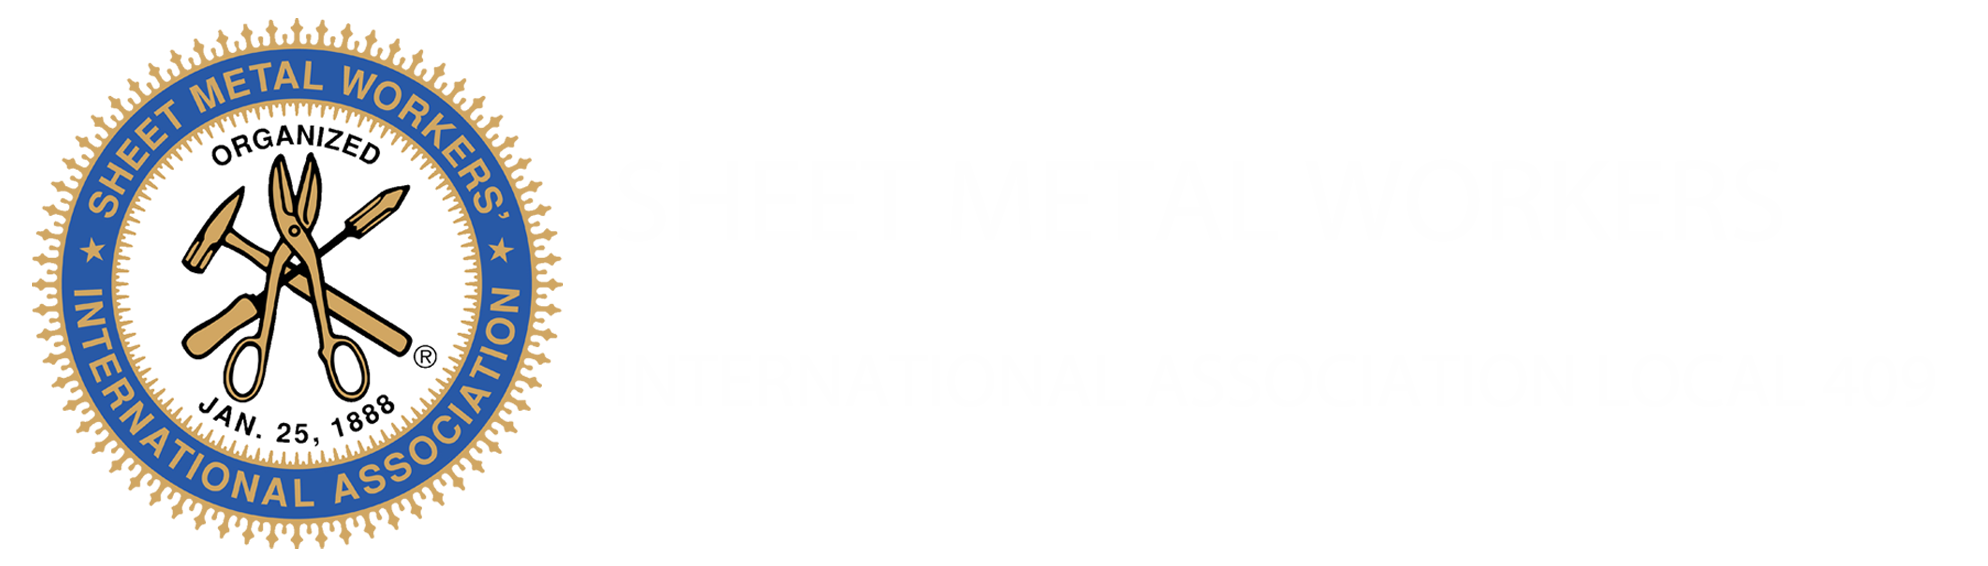 Sheet Metal Workers & Roofers